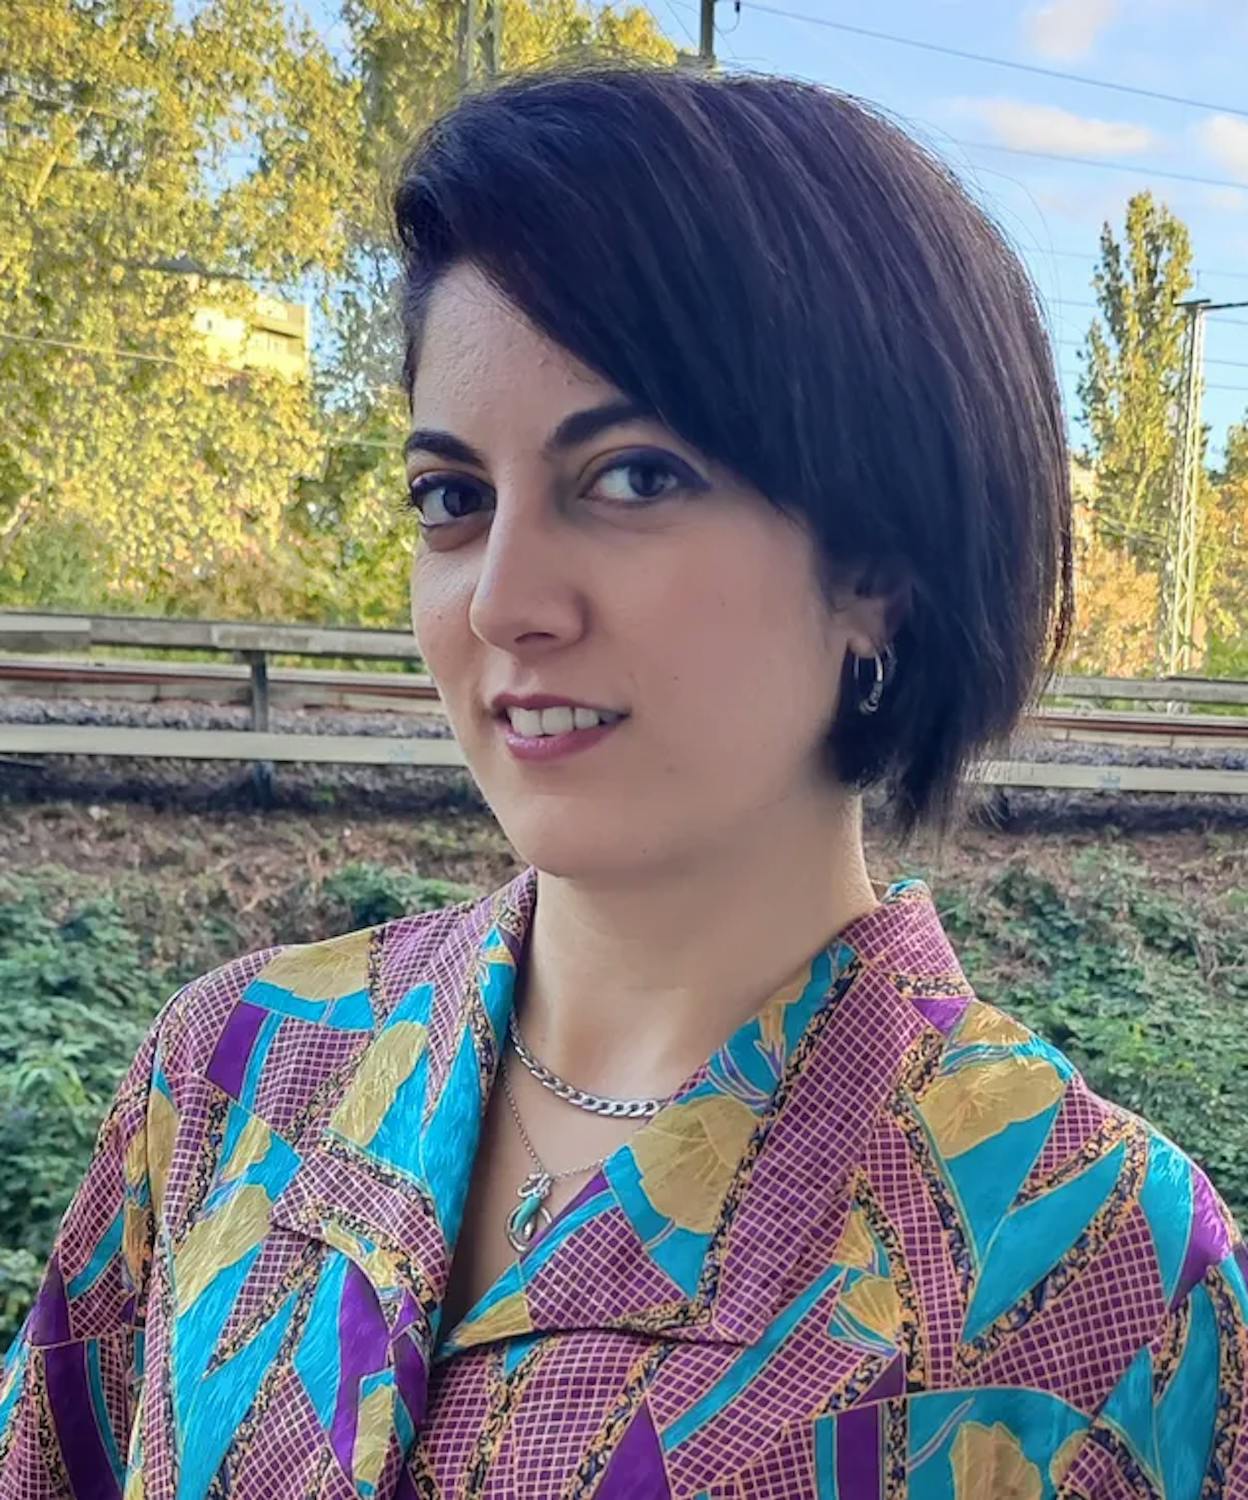 Sahar Mbarek, an Applied Scientist at Zalando